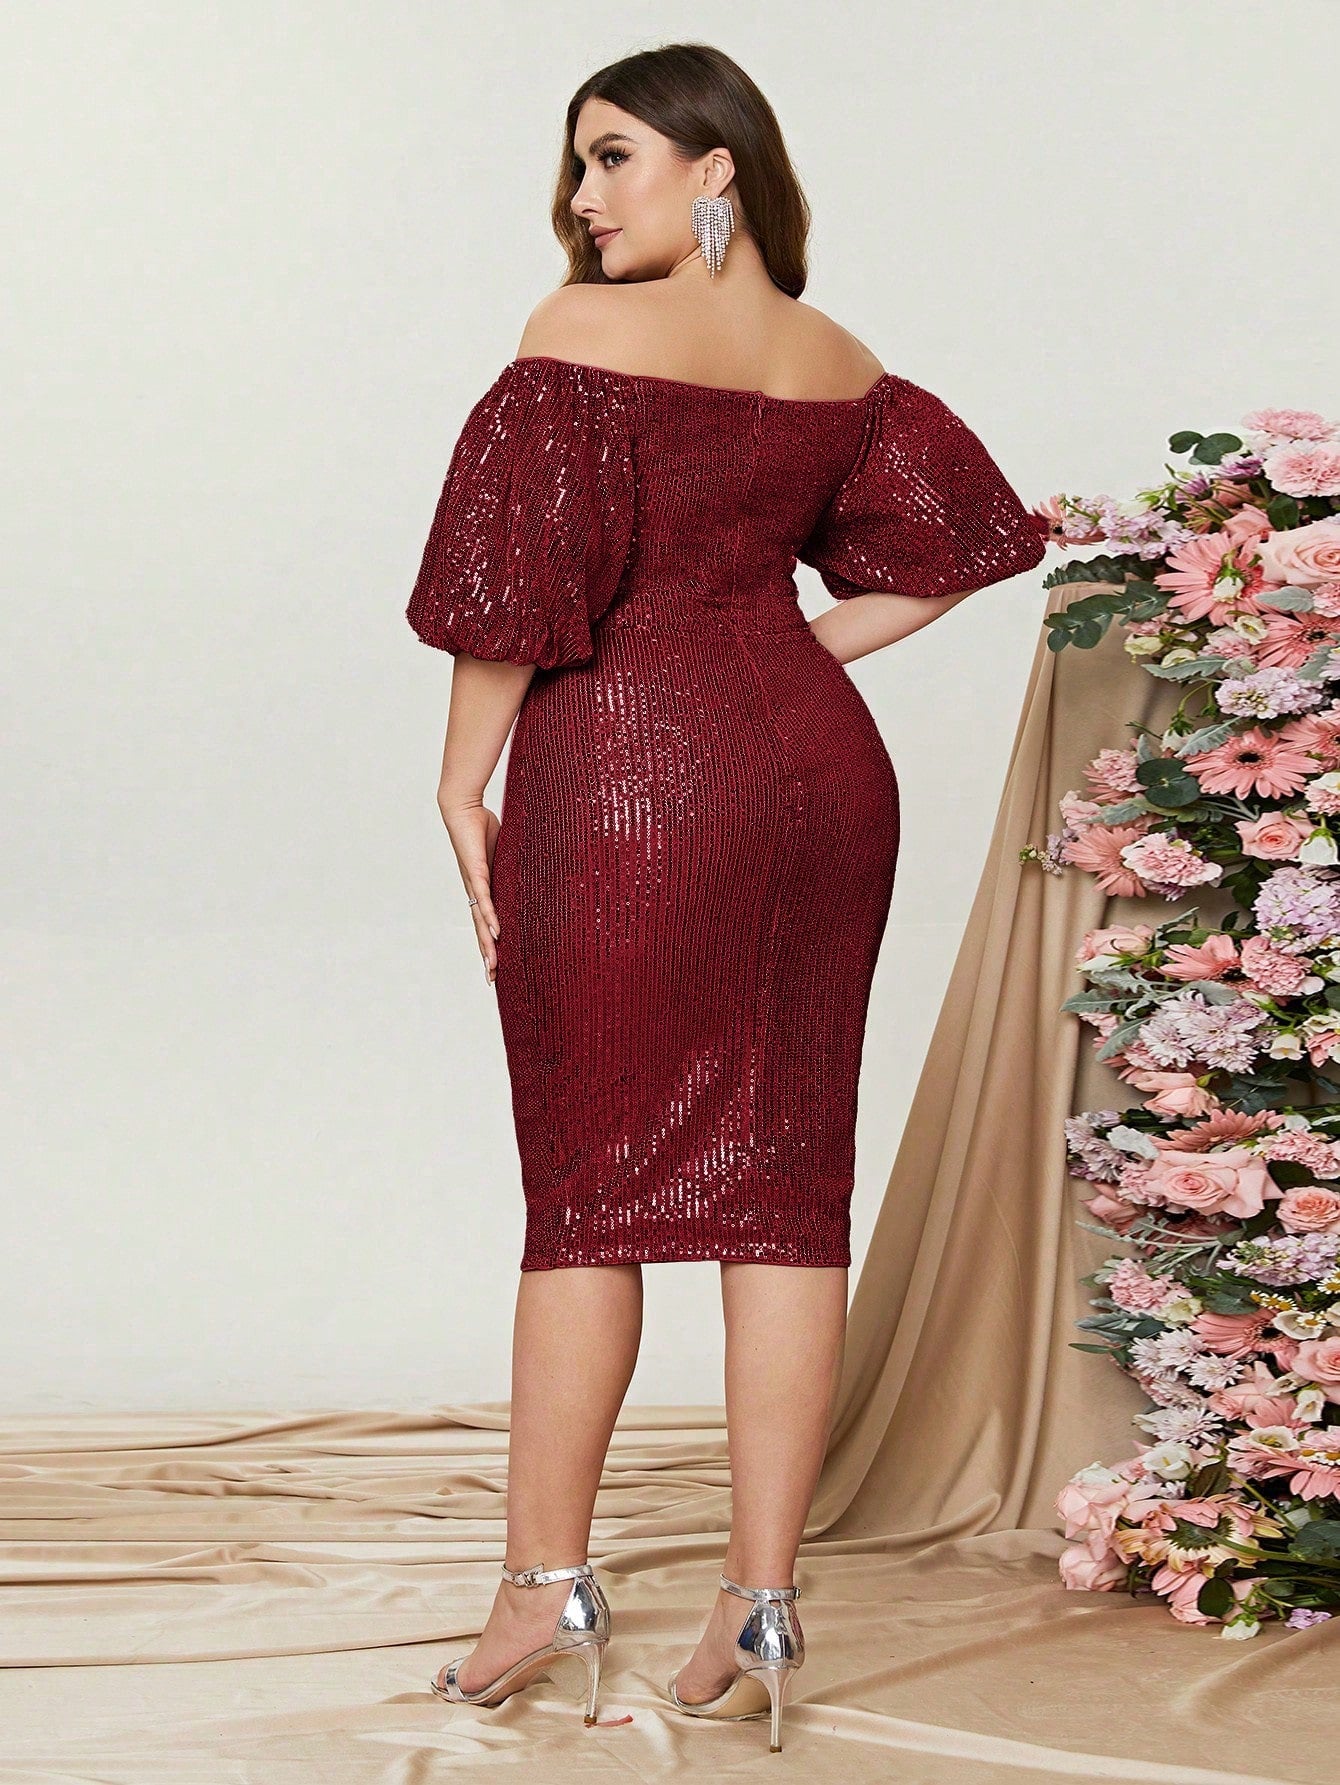 Glamorous Plus-Size Sequin Dress: Chic Off-Shoulder, Form-Fitting Elegance